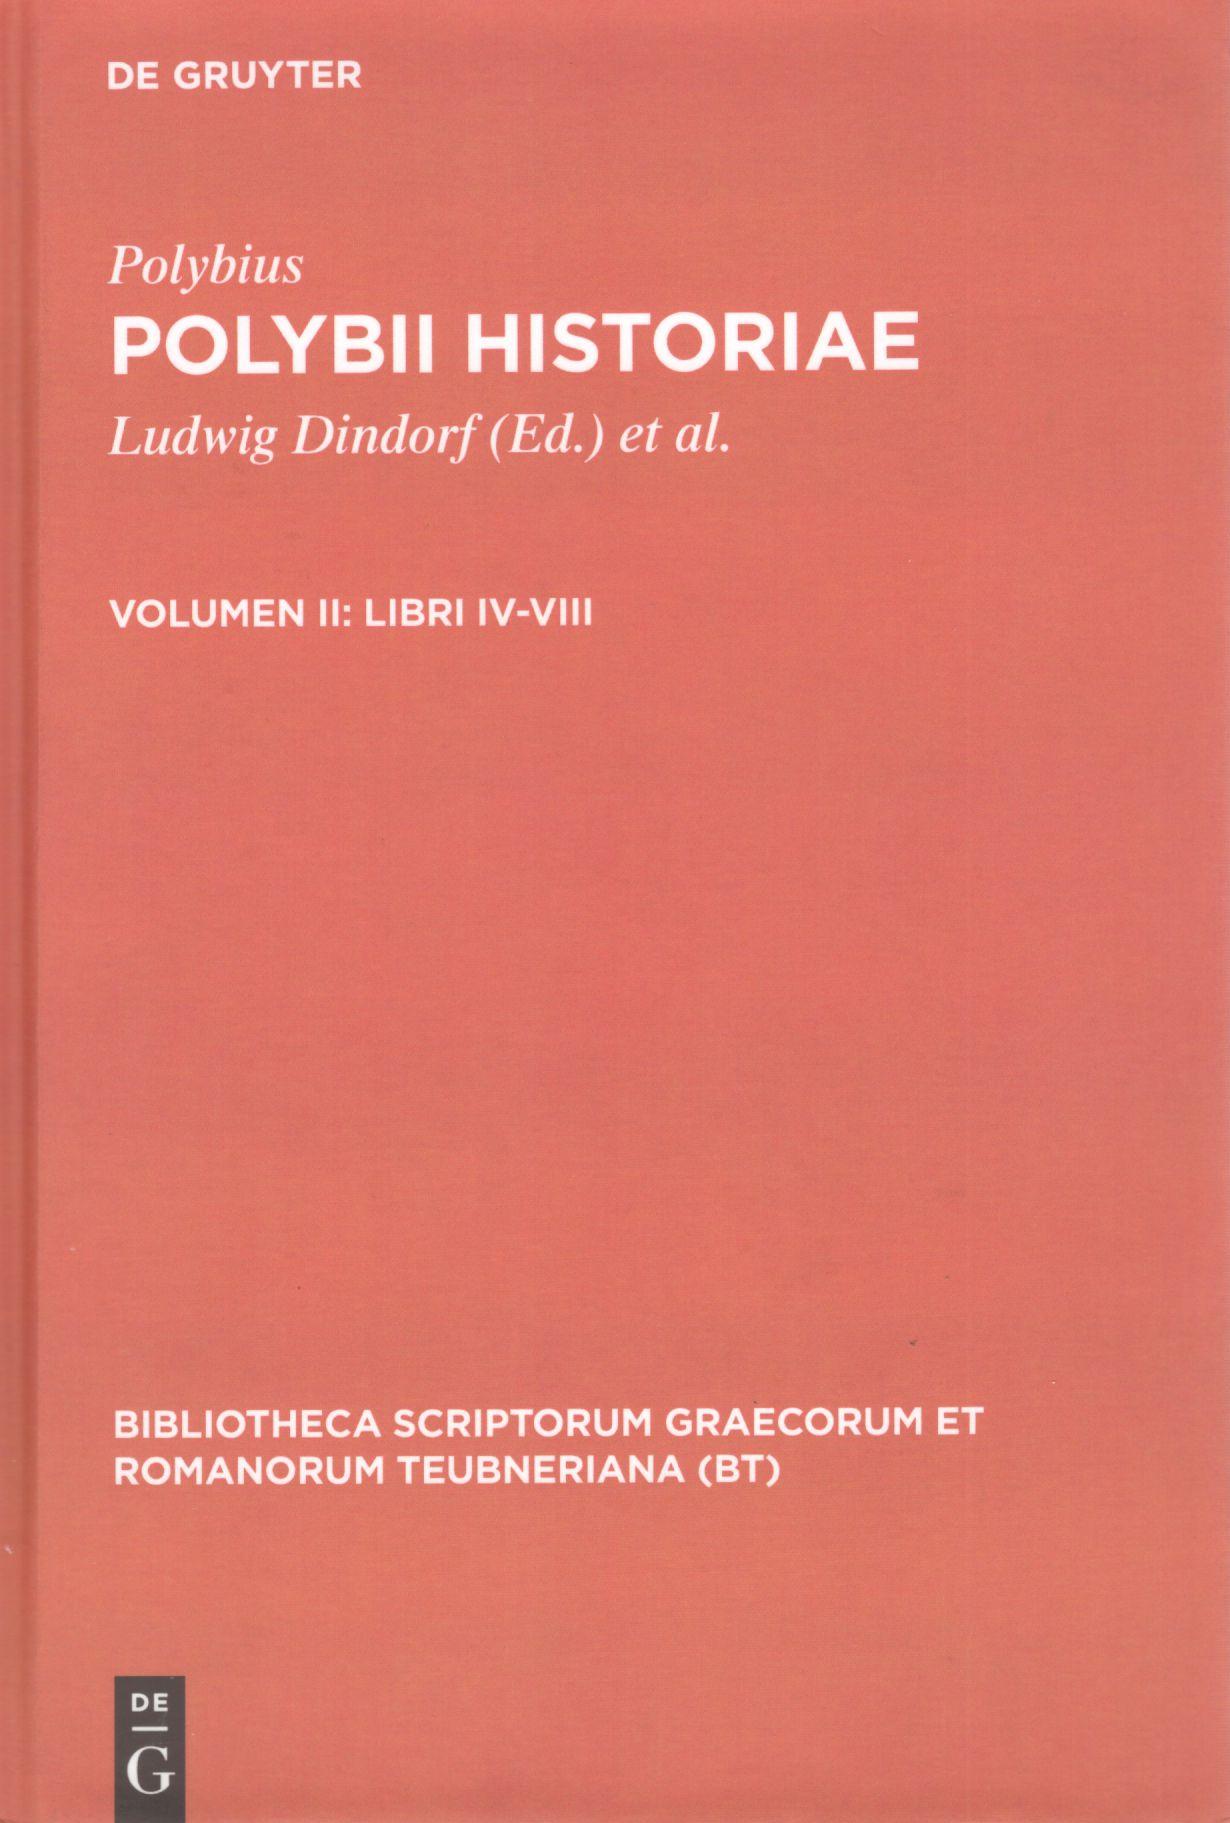 POLYBII HISTORIAE VOLUME II: LIBRI IV-VIII